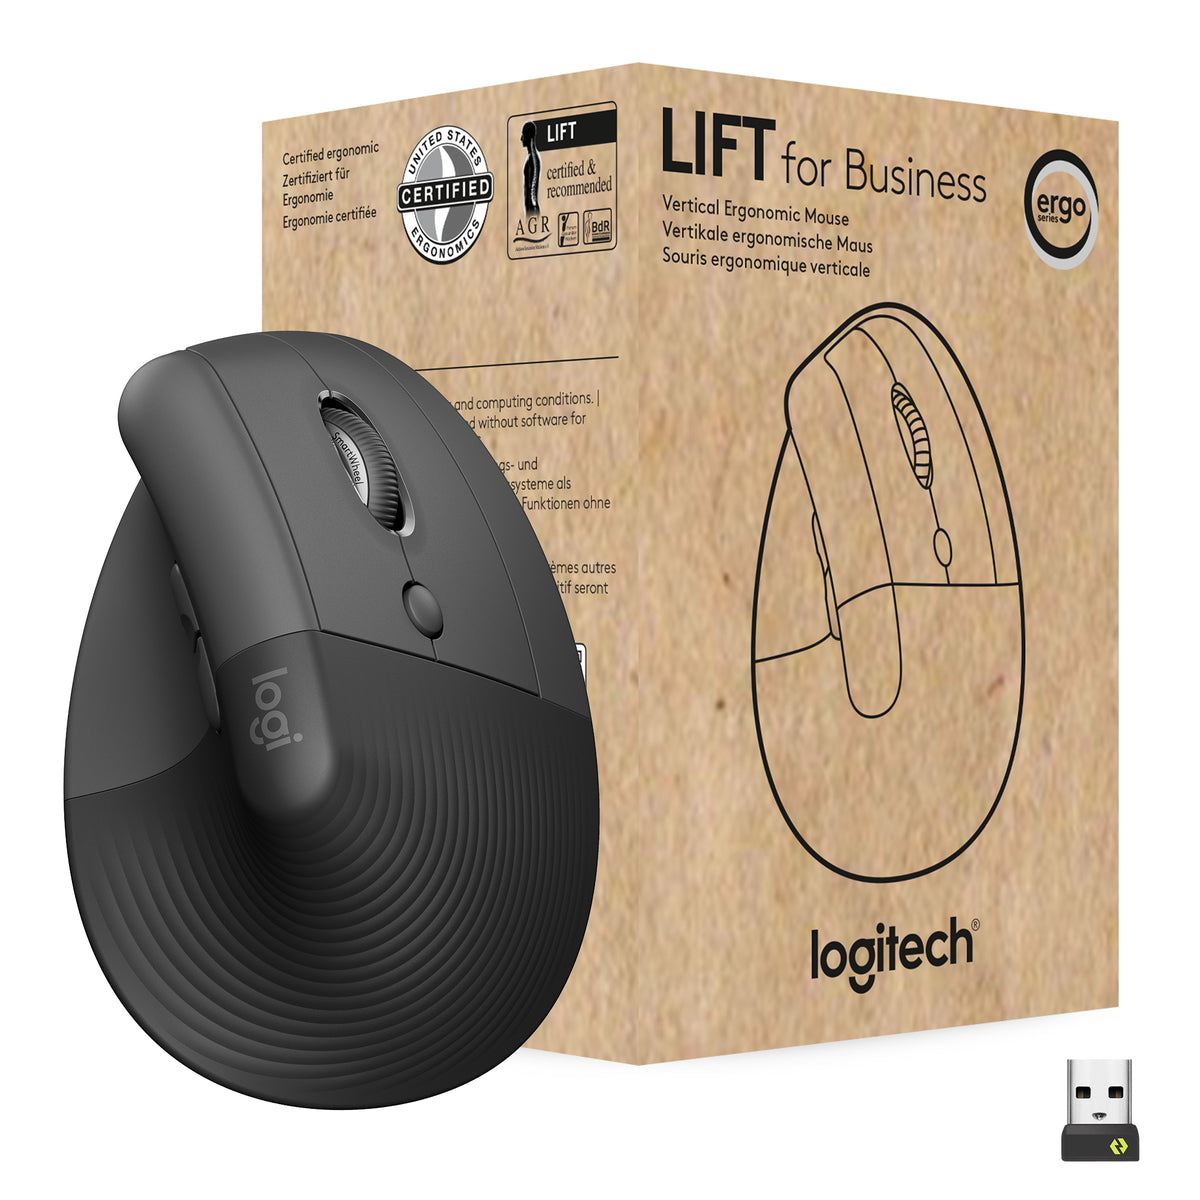 Logitech Lift for Business - Upright mouse - ergonomic - 6 buttons - wireless - Bluetooth, 2.4 GHz - Logitech Logi Bolt USB receiver - graphite